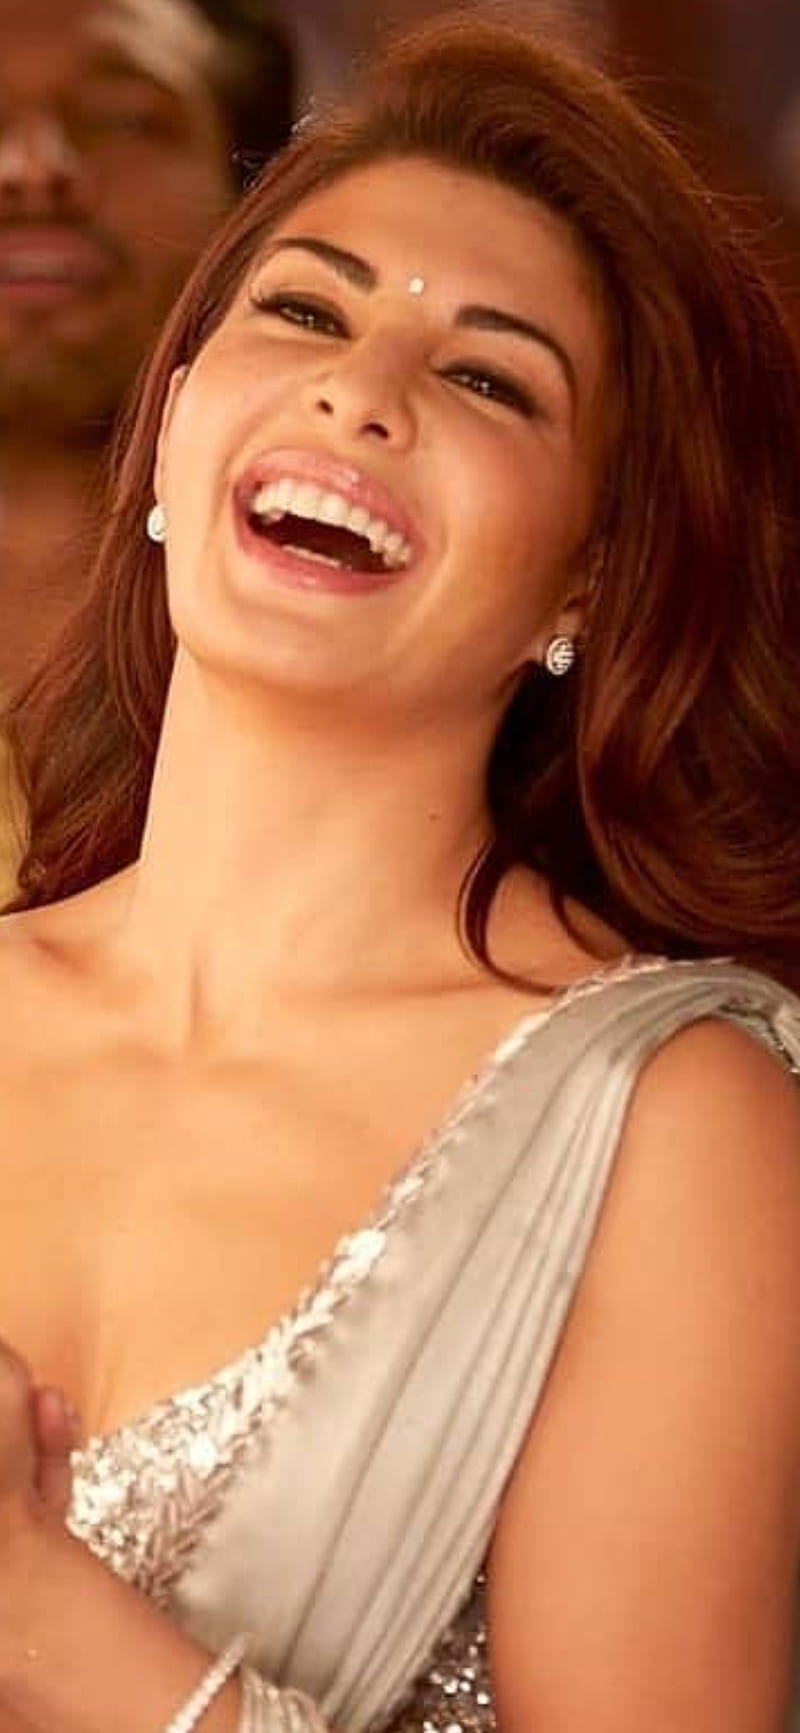 Jacqueline Fernandez Wallpapers Hd Cute Smile